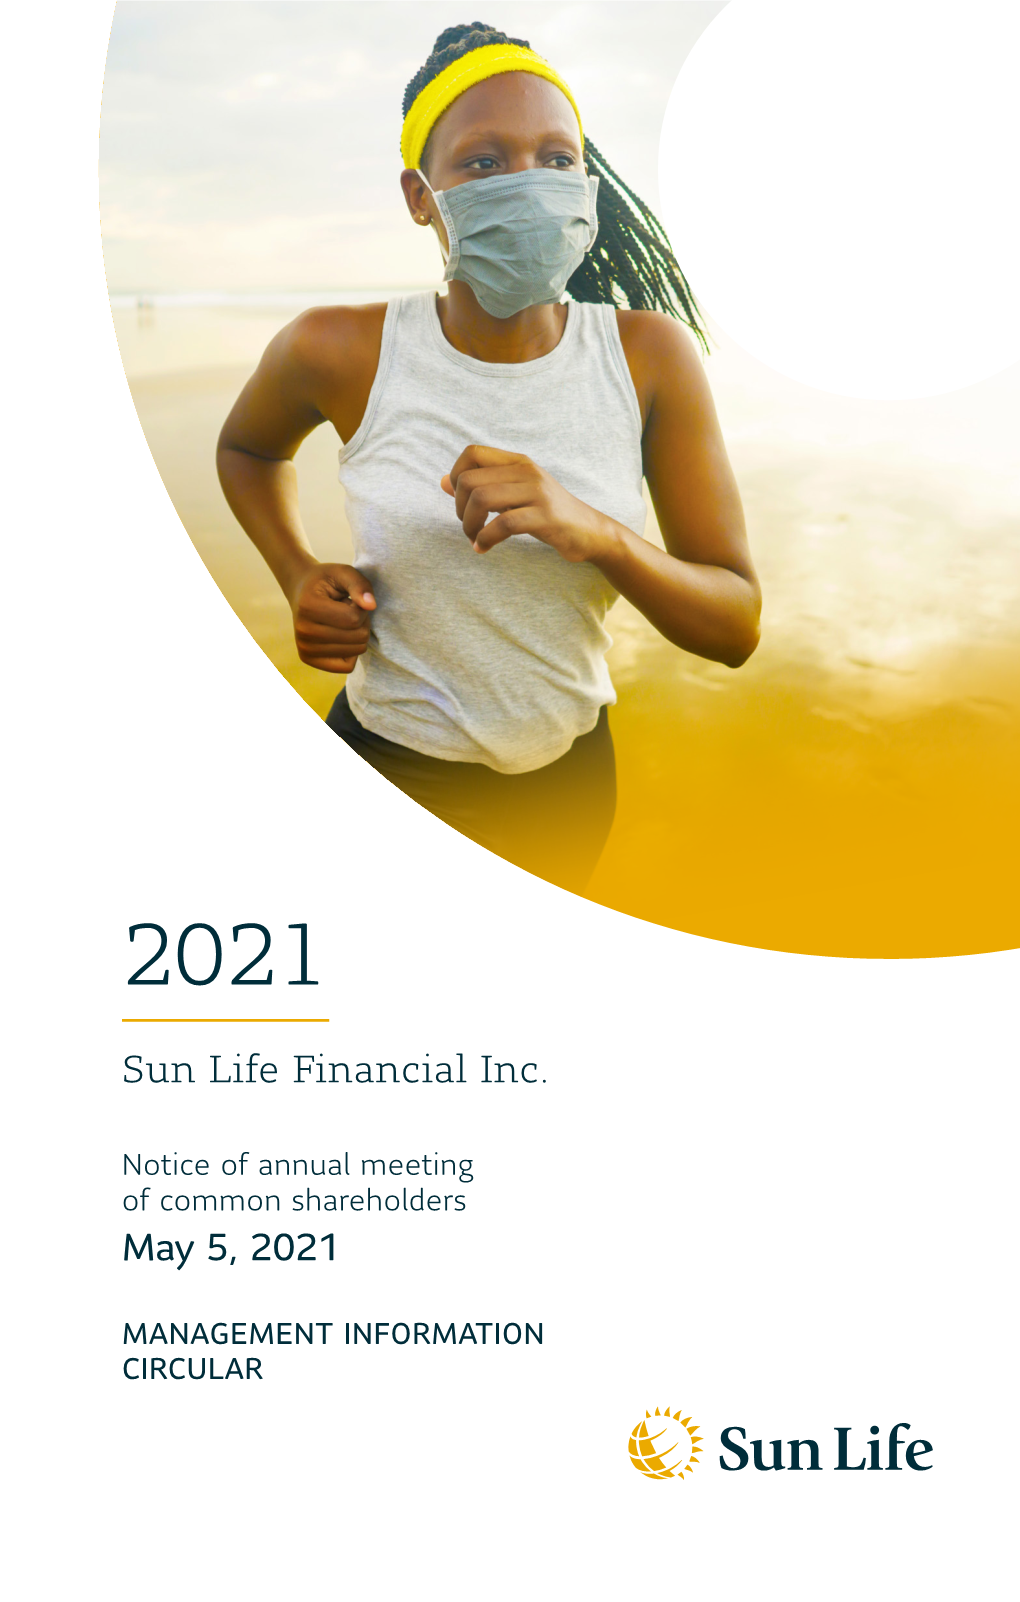 Sun Life Financial Inc. May 5, 2021